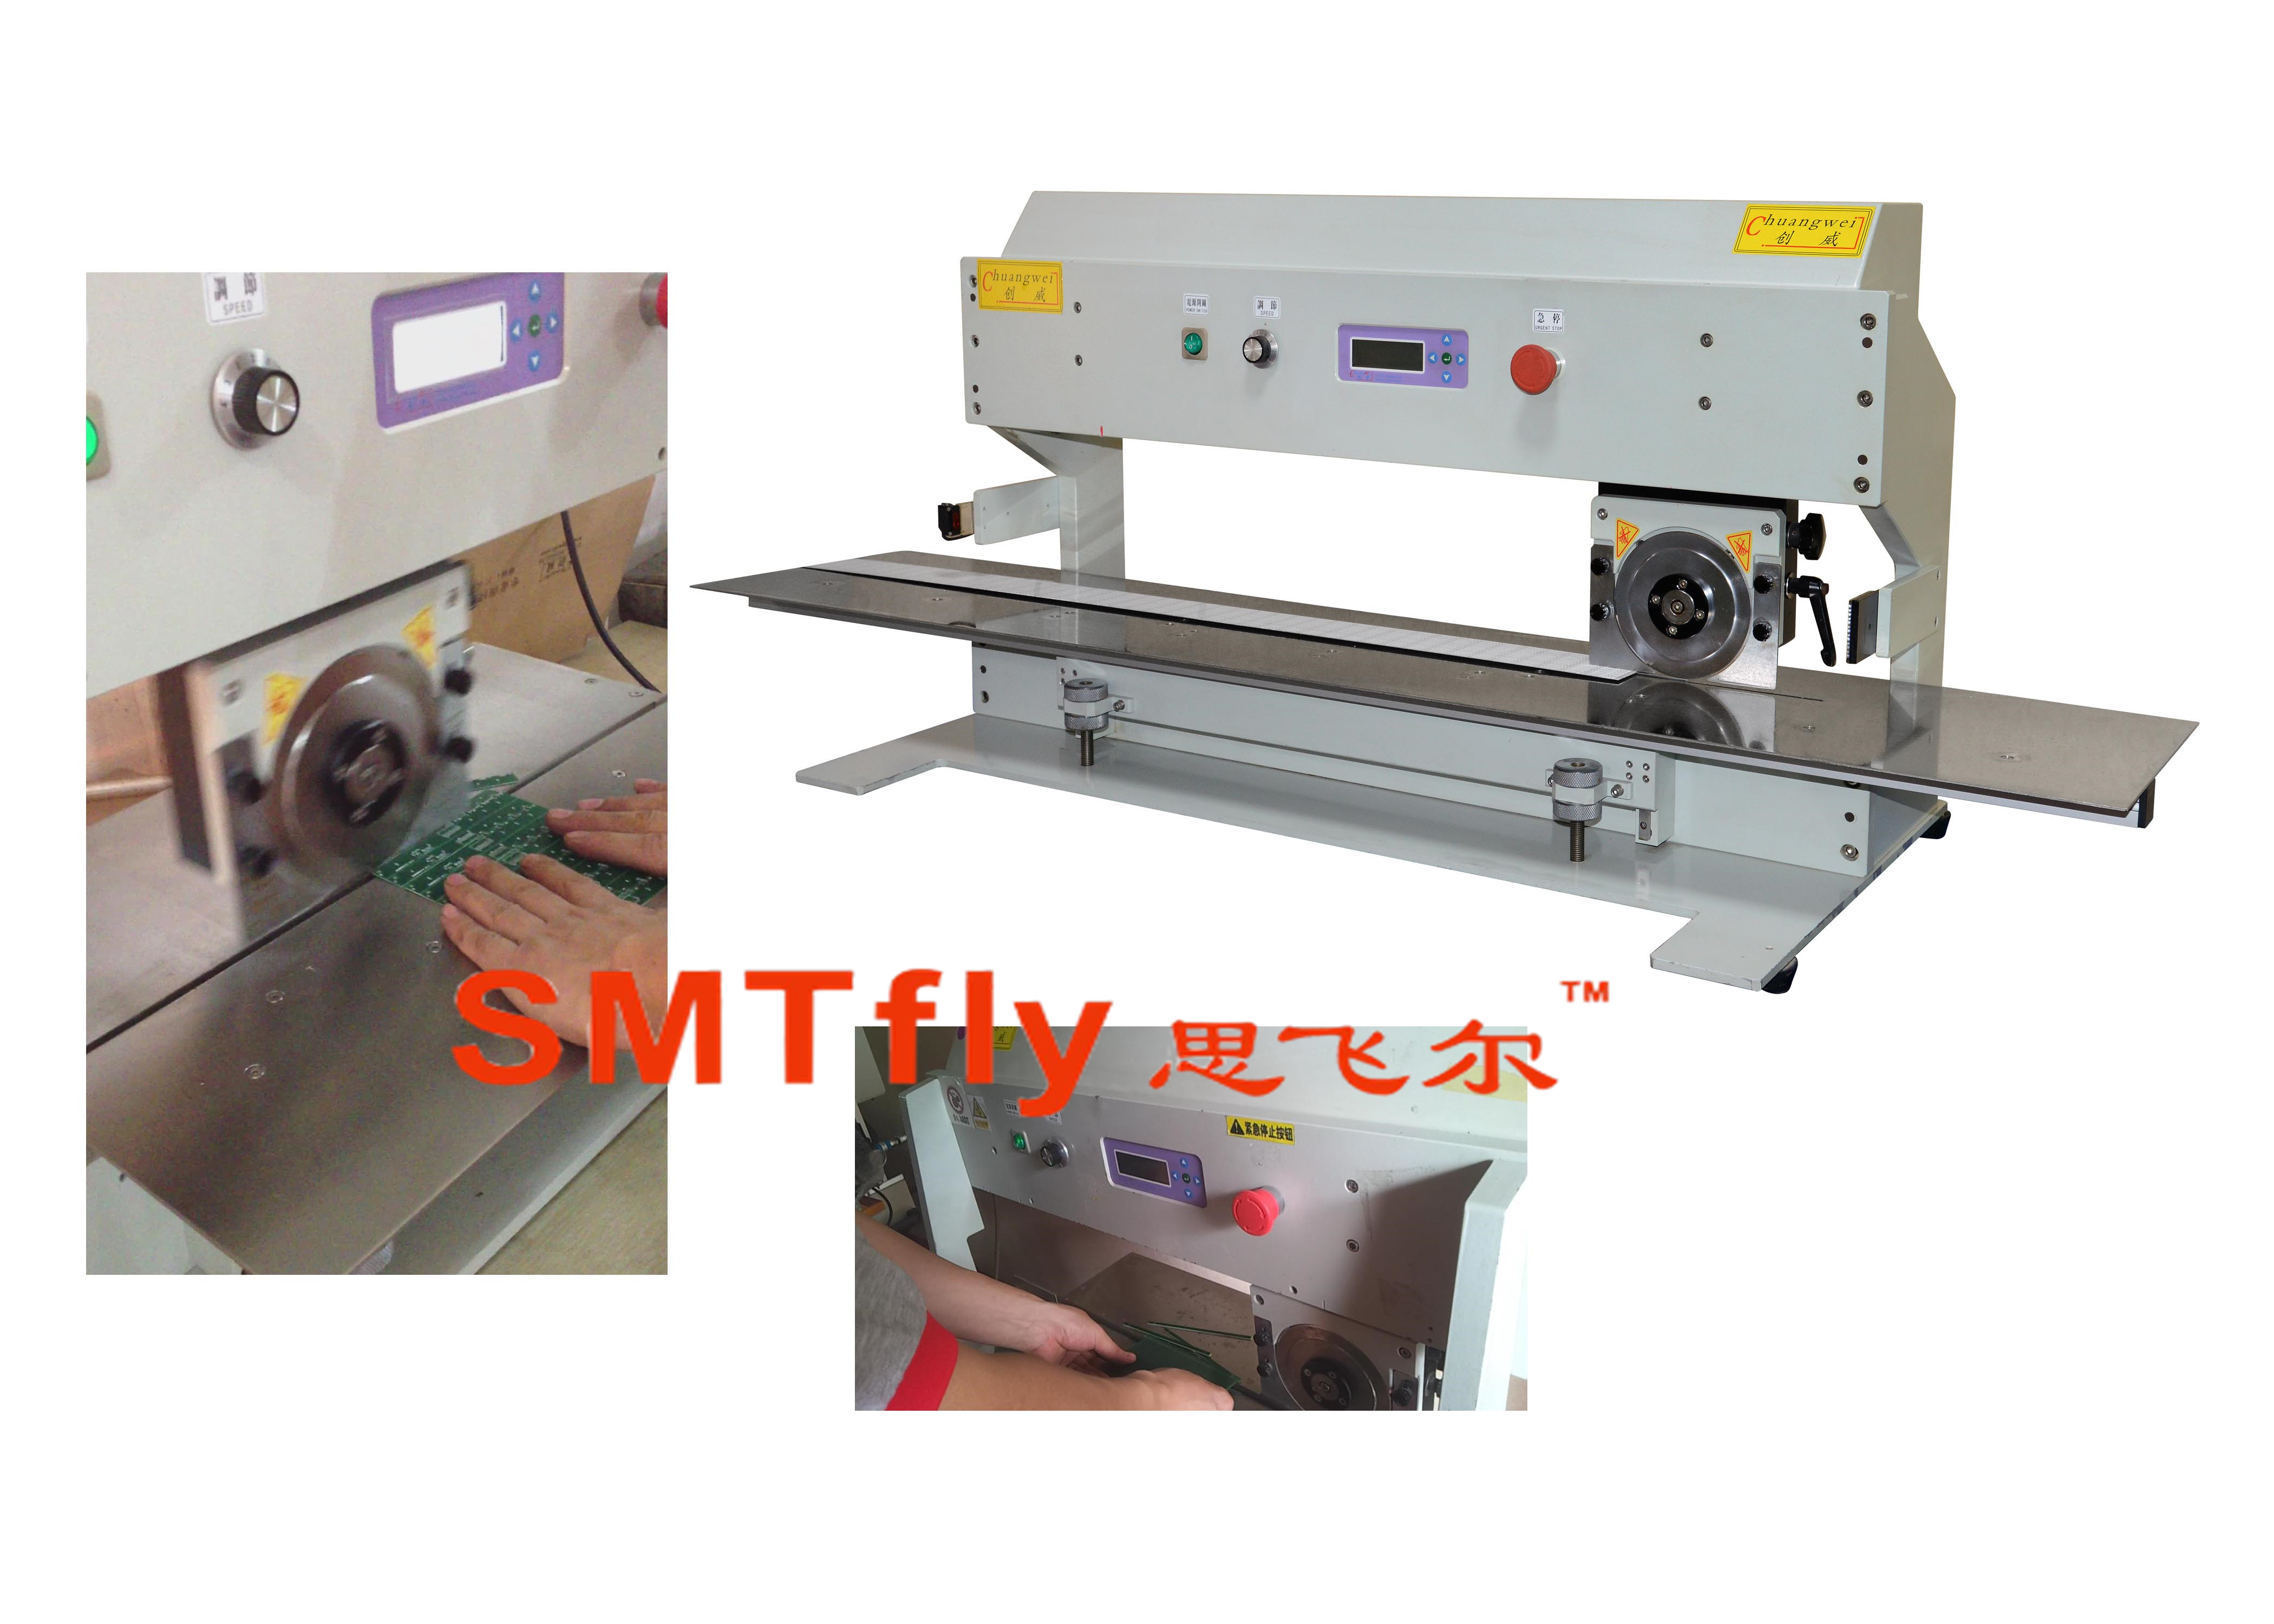 Printed Circuit Board Cutting Tool,SMTfly-1A